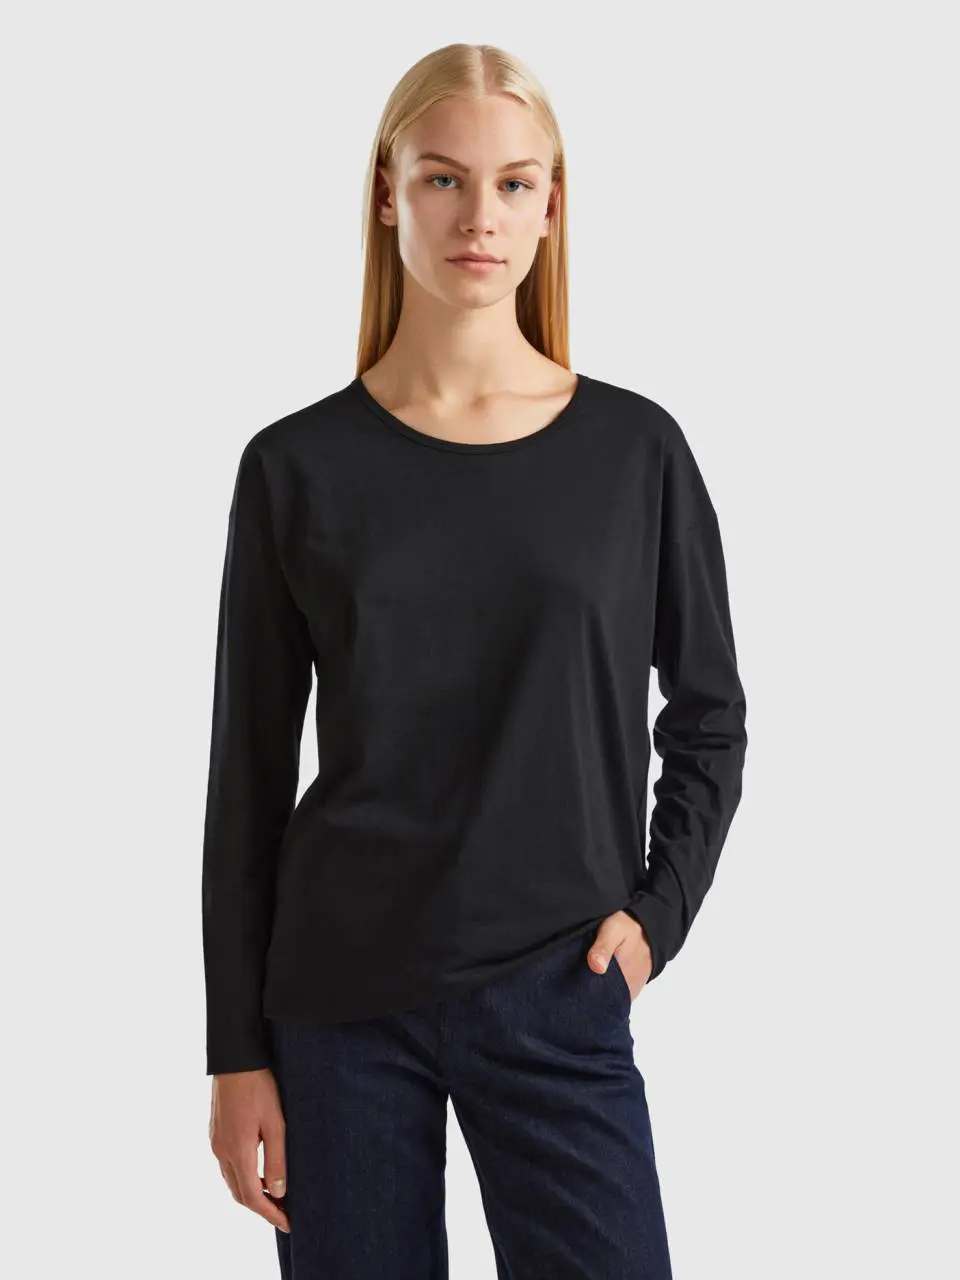 Benetton black long fiber cotton t-shirt. 1